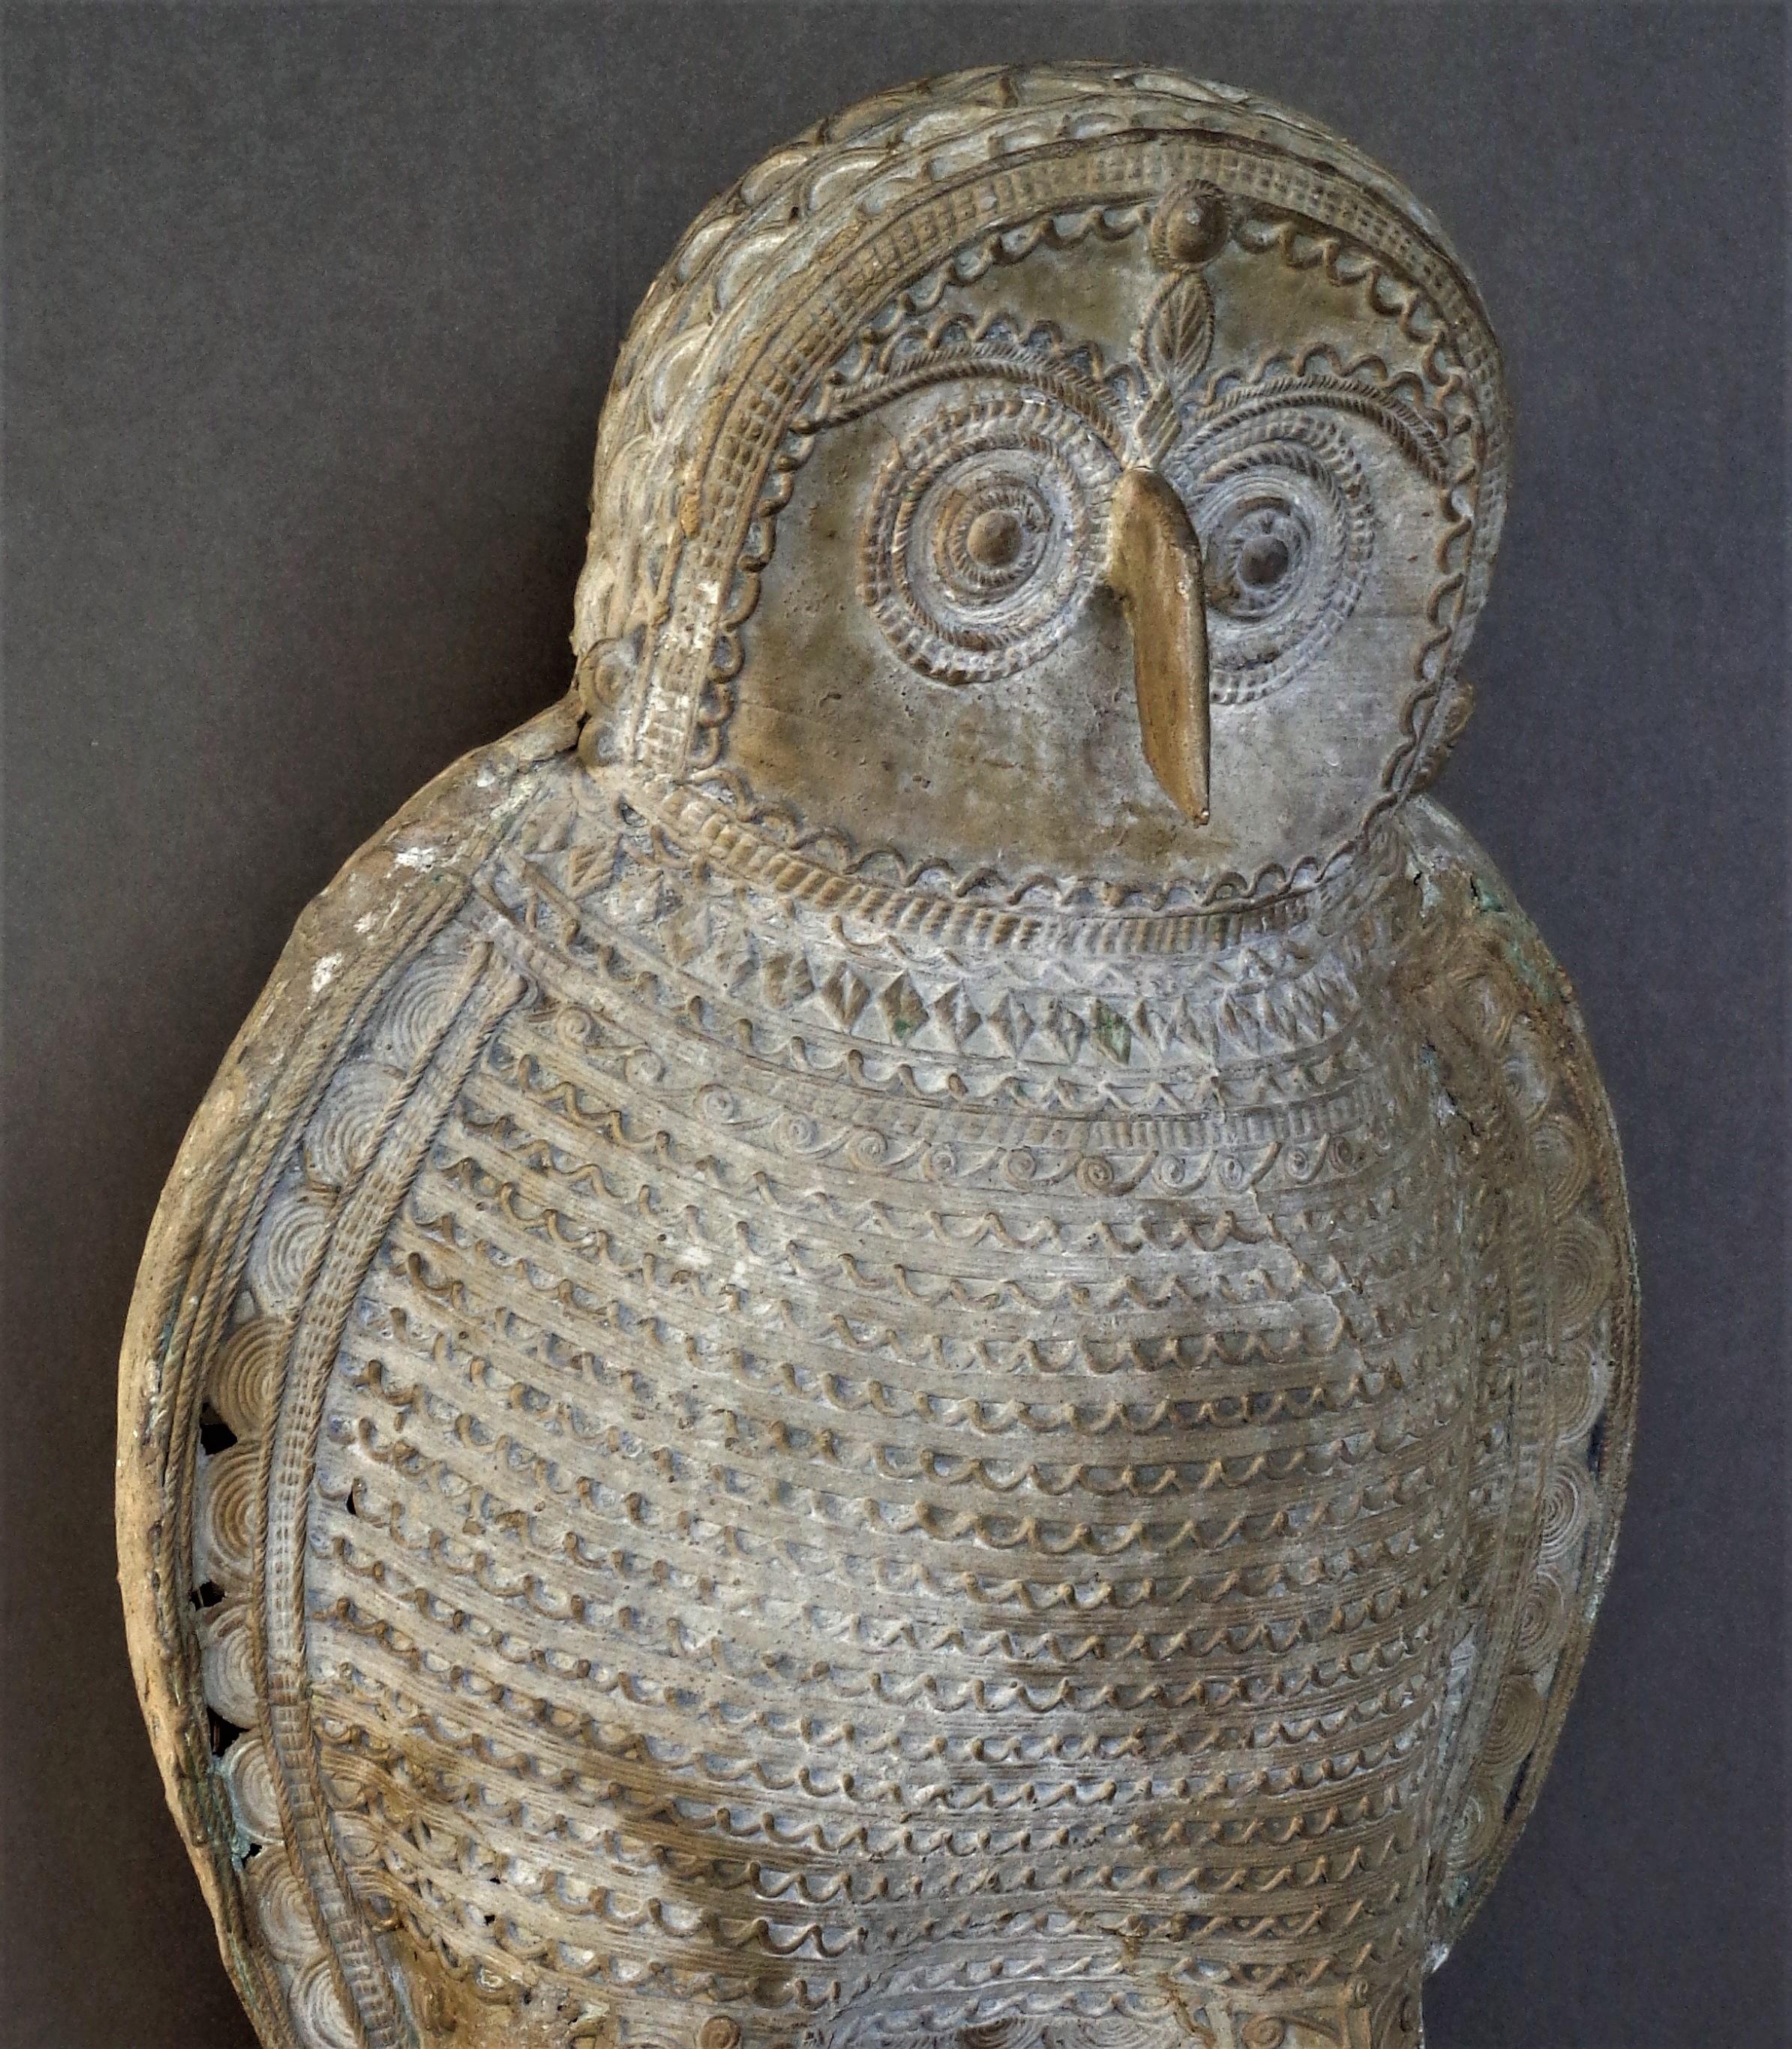 Hand-Crafted    Large Zinc Metal Owl Sculpture, Circa 1900